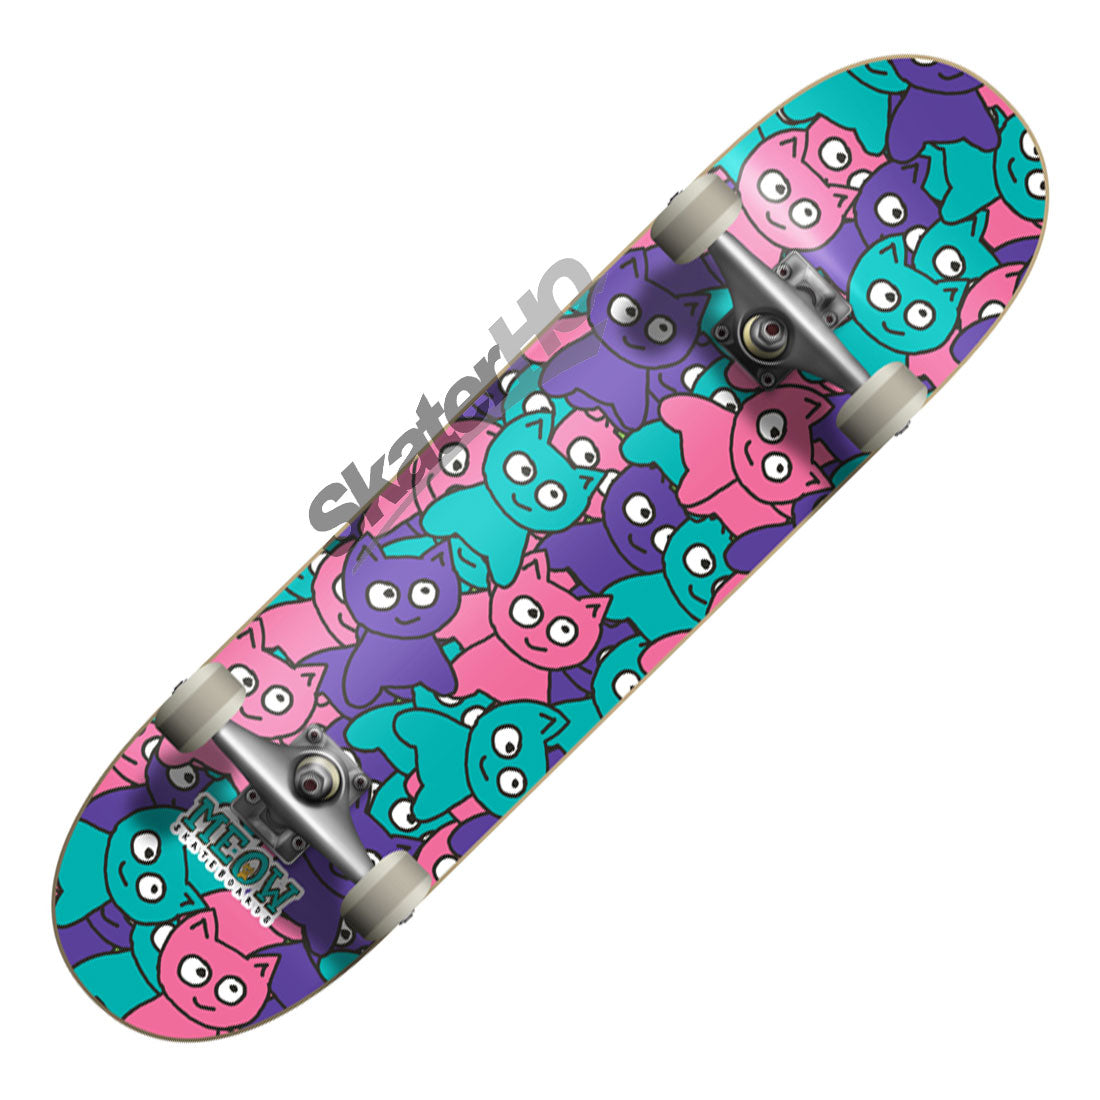 Meow Sticker Pile 7.75 Complete - Pink/Teal Skateboard Completes Modern Street